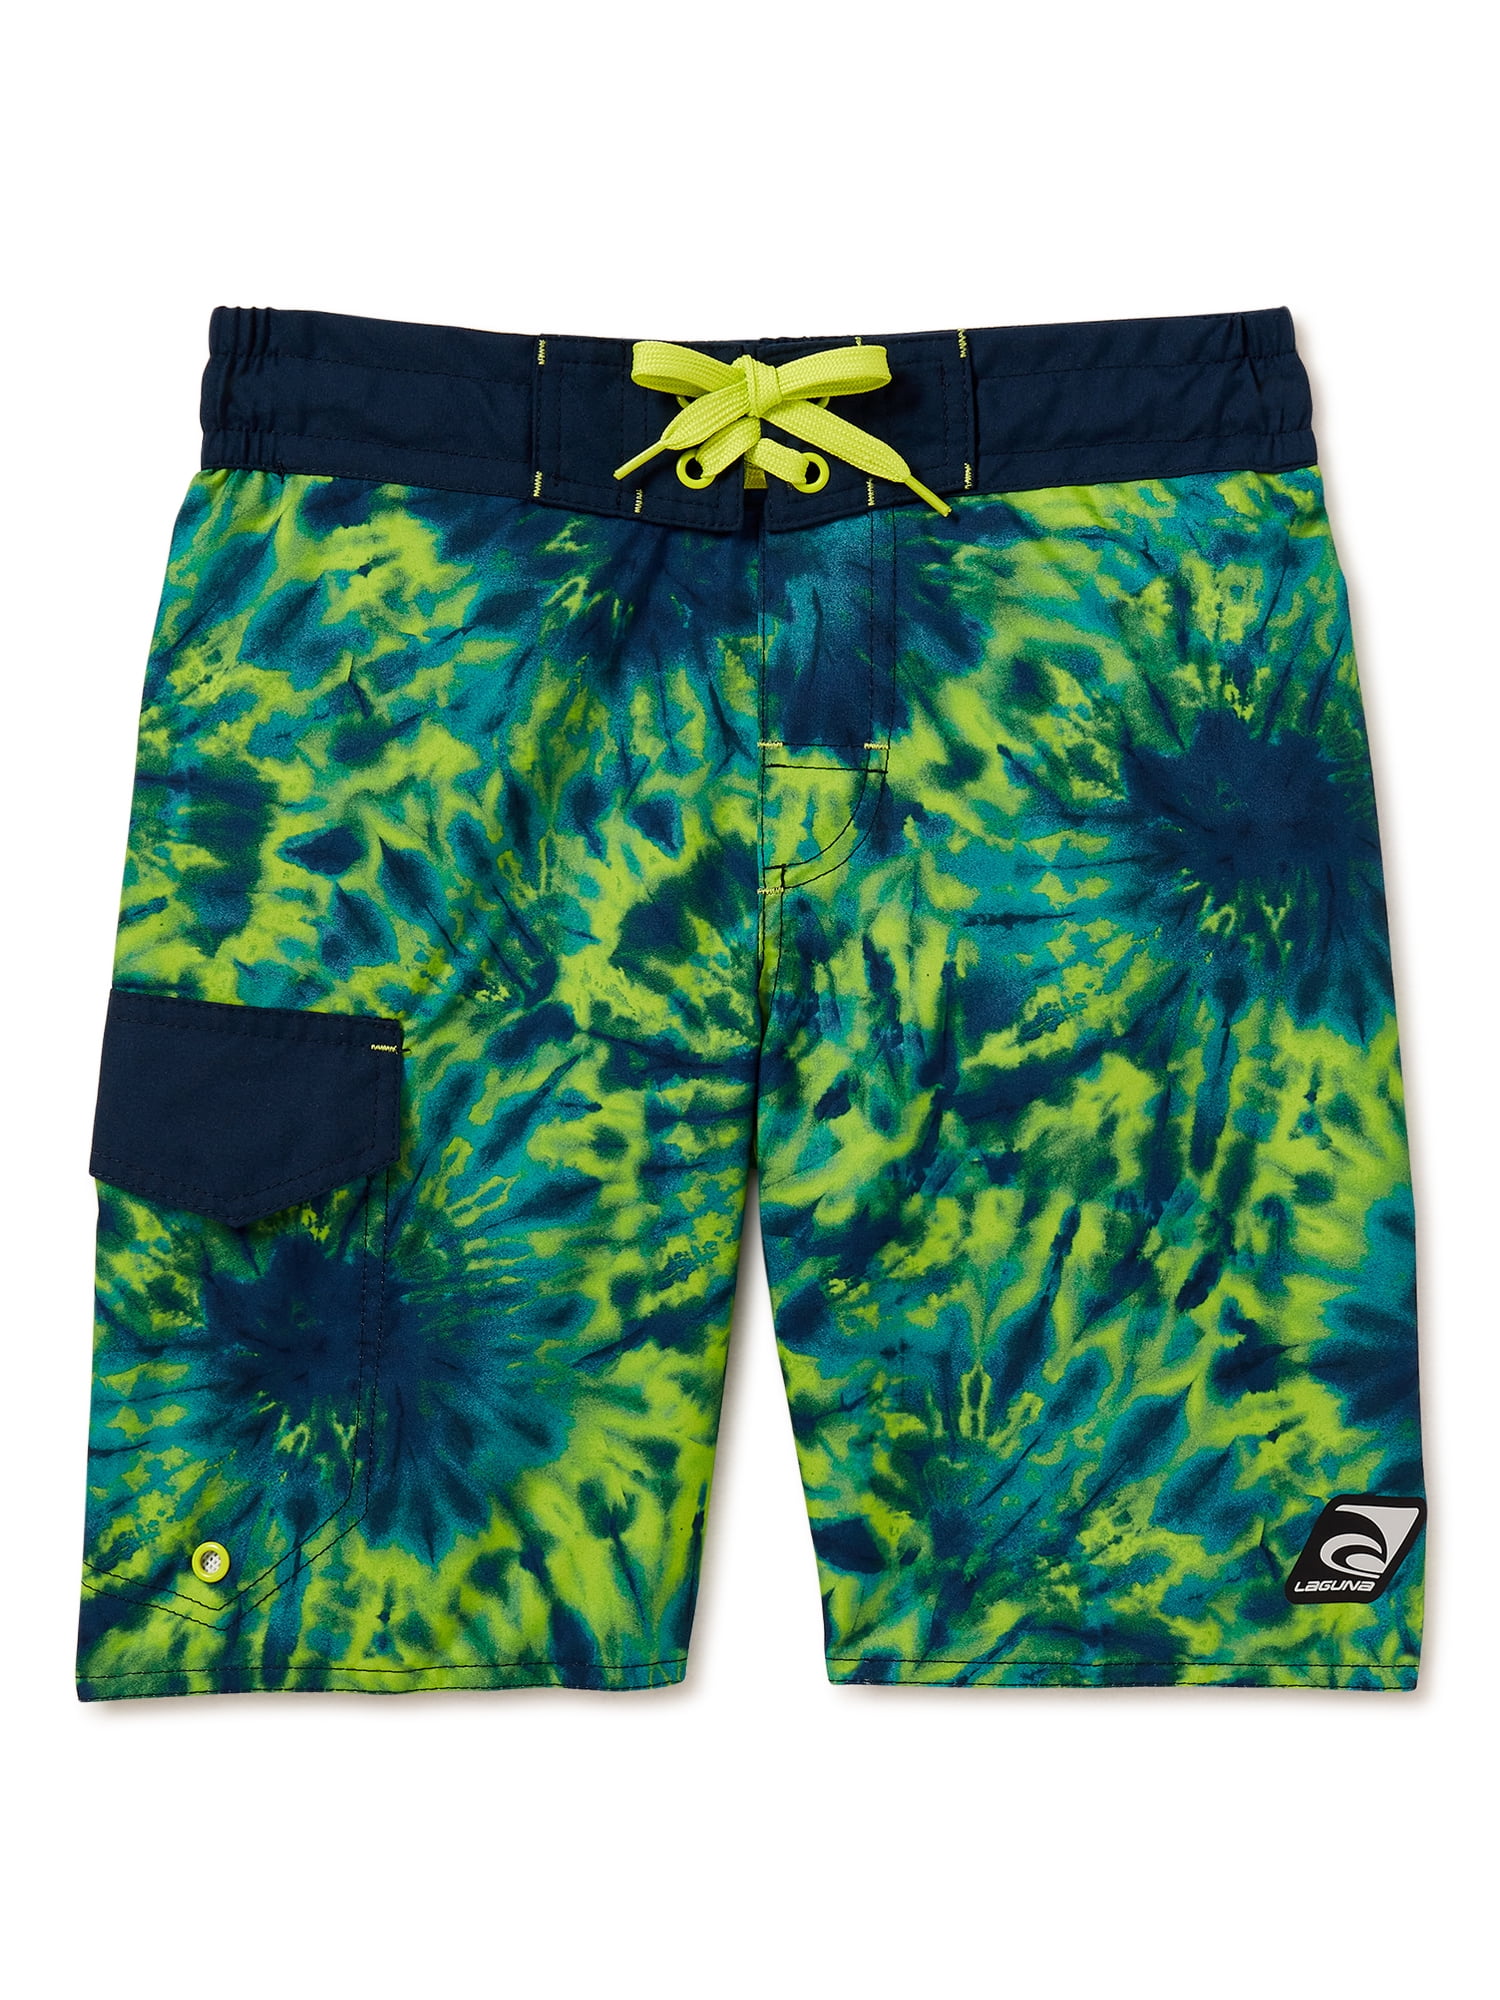 ZQ-SOUTH Mens Baseball Softball Laces Quick Dry Summer Beach Surfing Board Shorts Swim Trunks Cargo Shorts